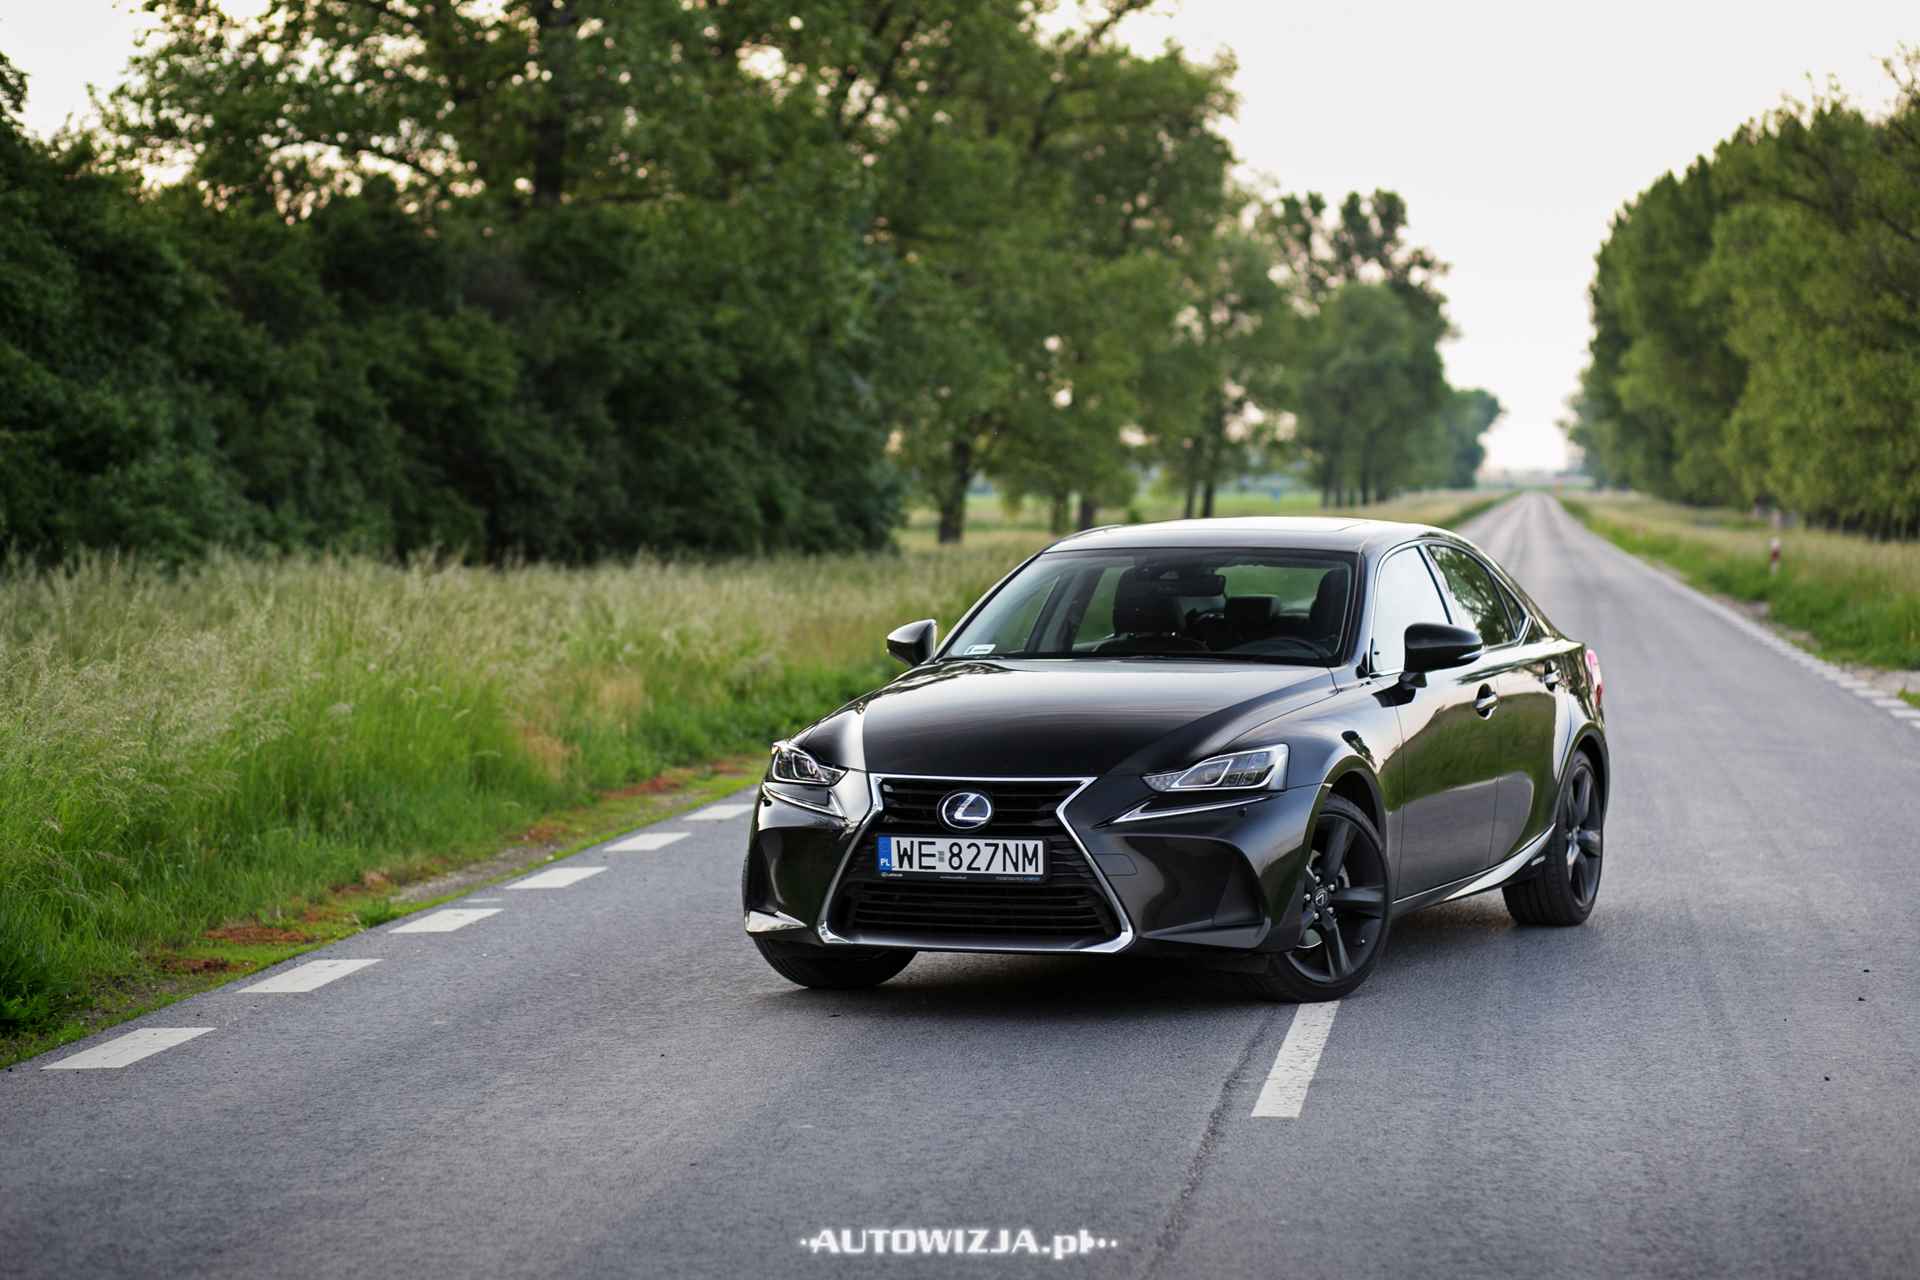 Lexus IS 300h Black AUTO TEST AUTOWIZJA.pl Motoryzacja